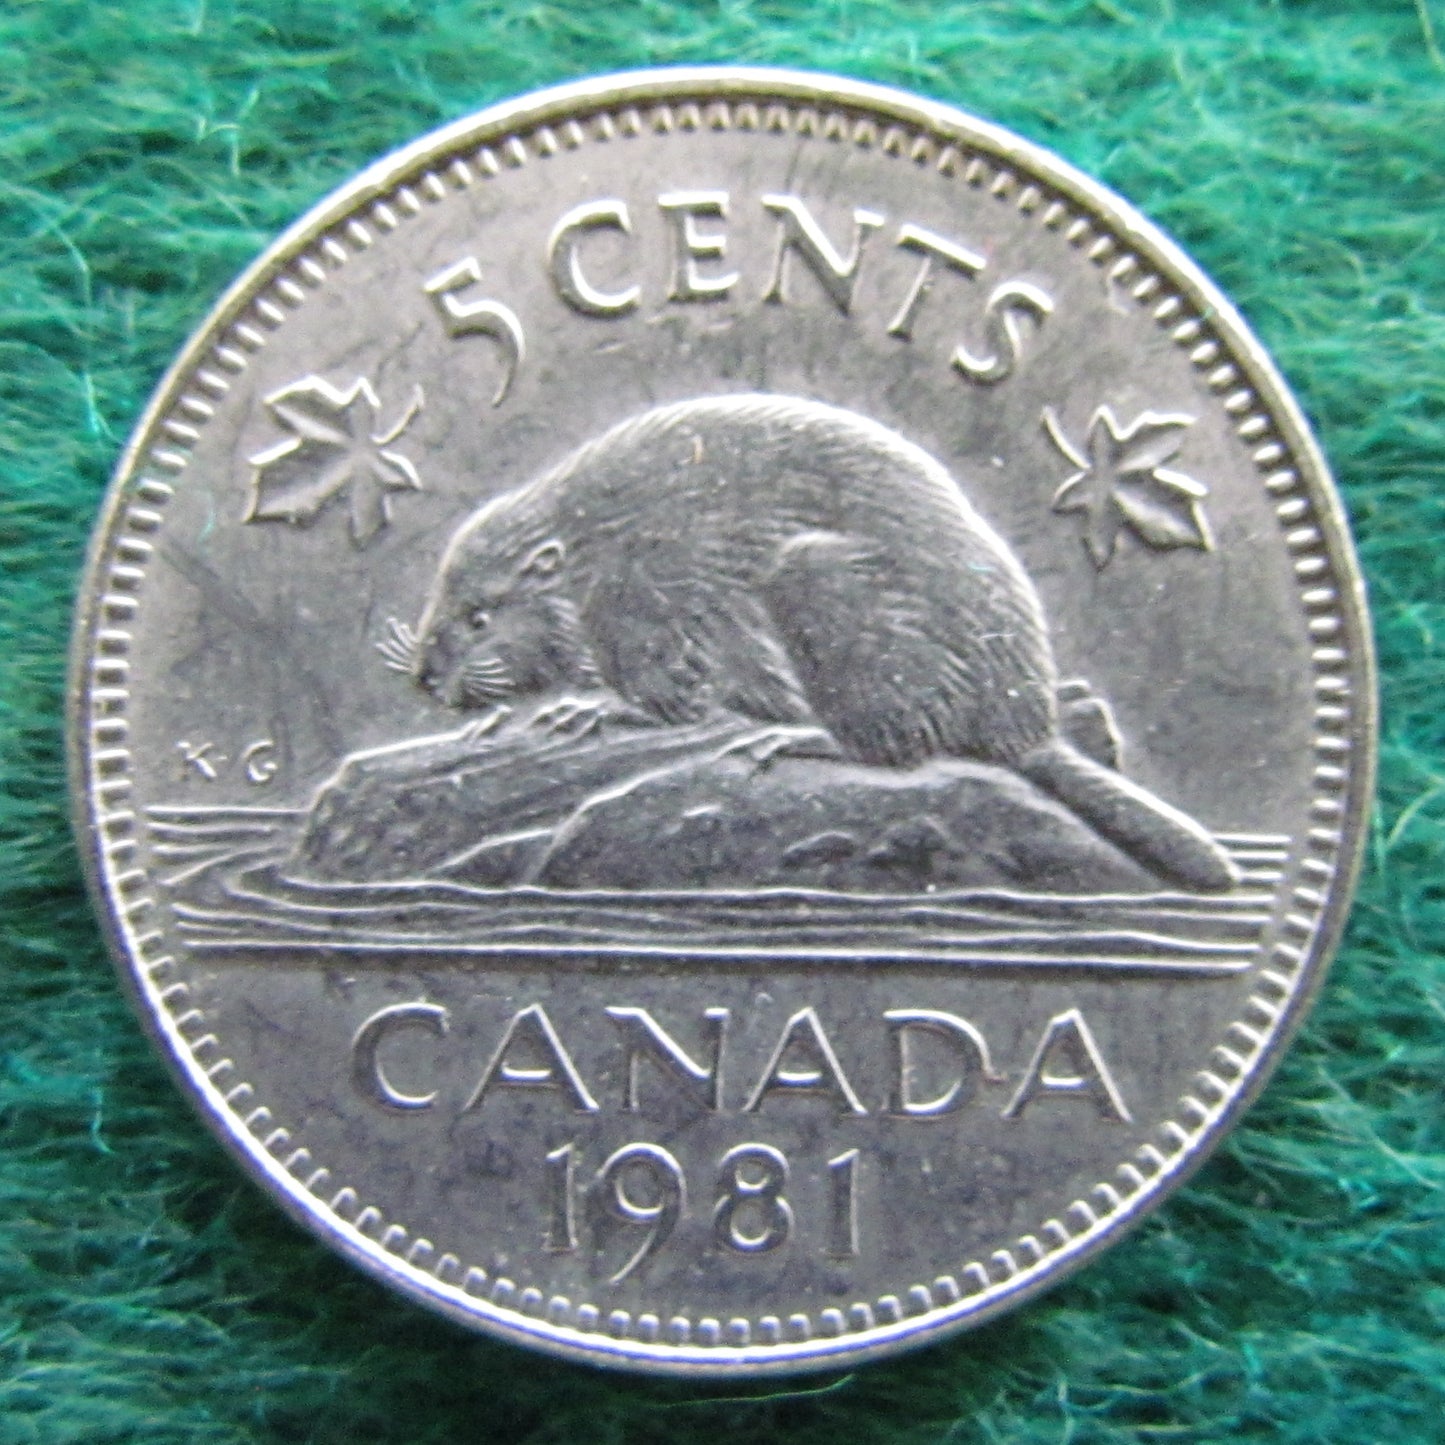 Canada 1981 5 Cent Queen Elizabeth II Coin - Circulated